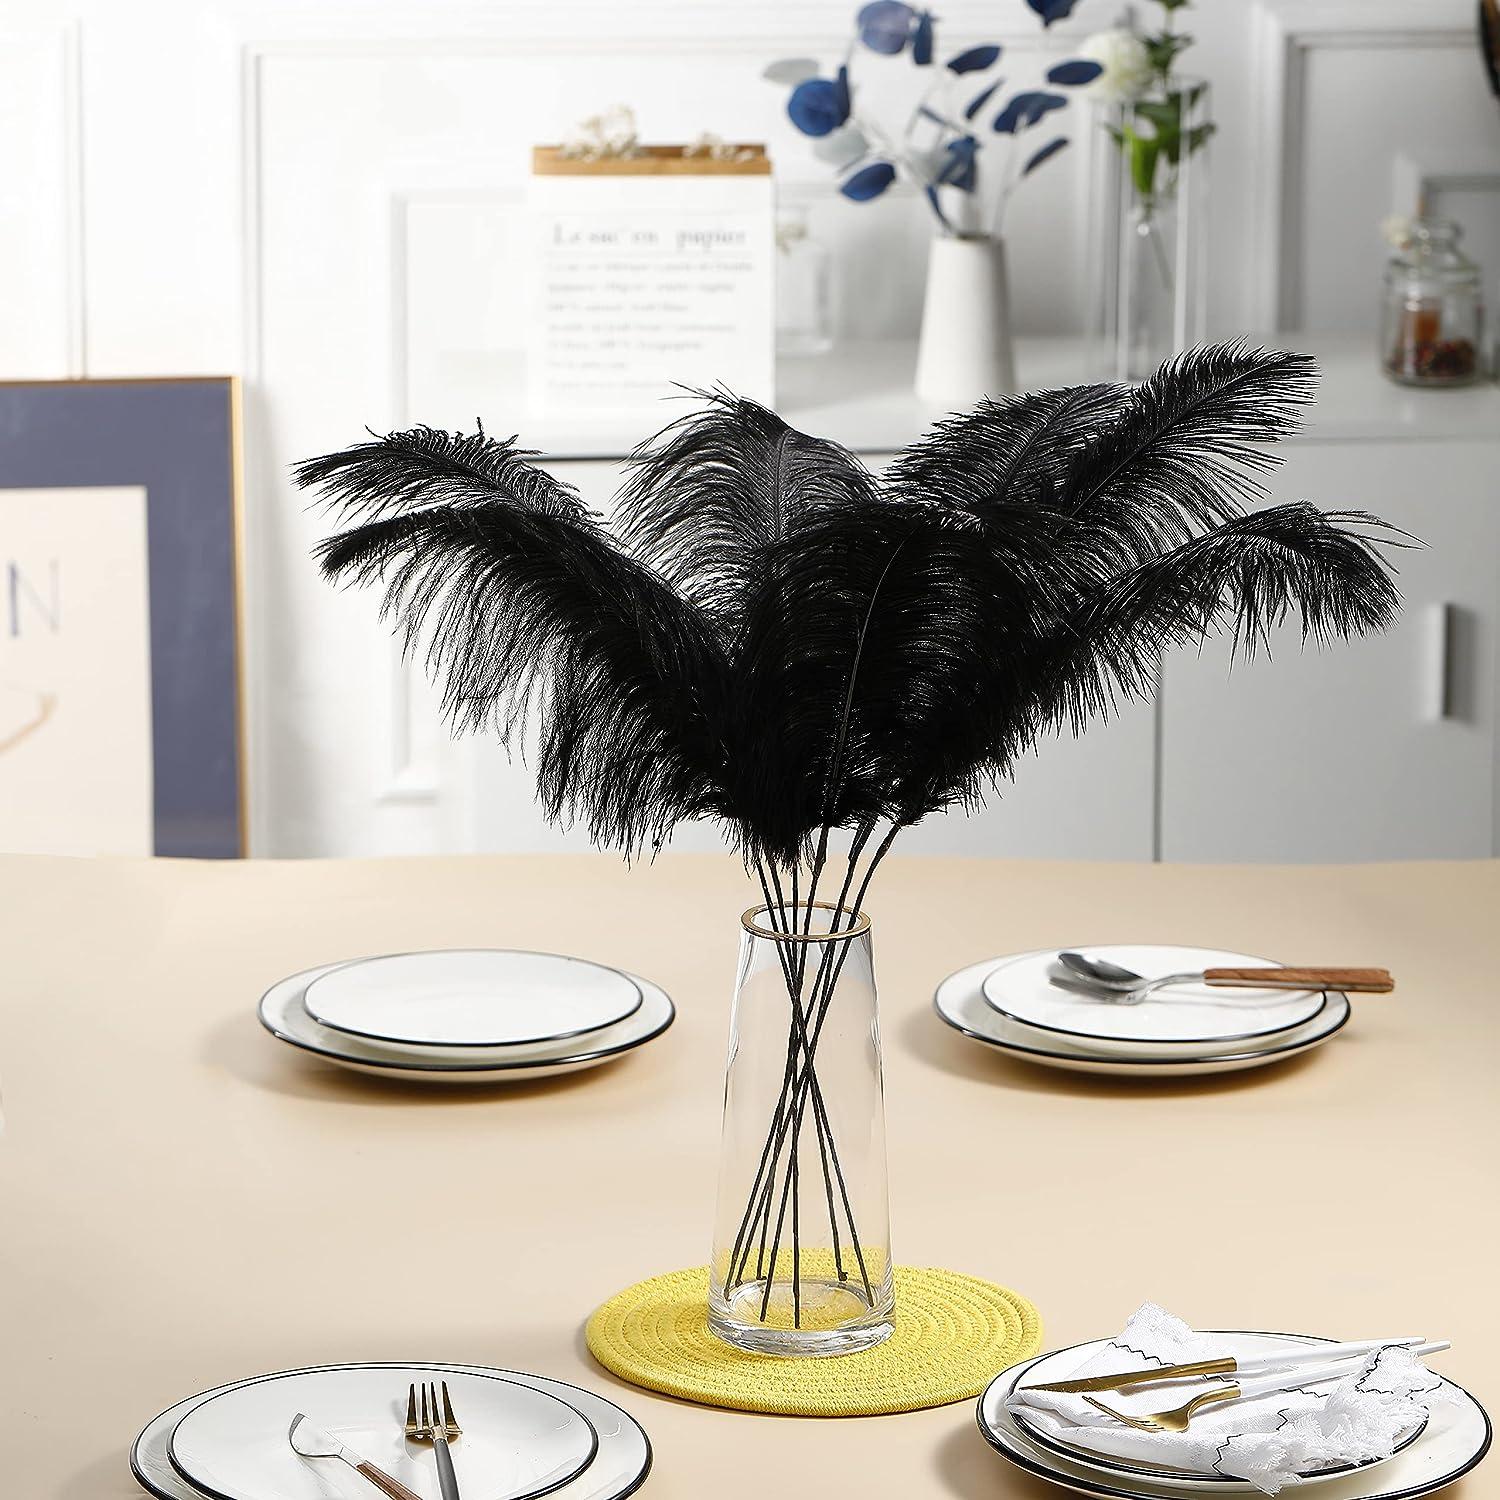 Ballinger 24pcs Natural Black Ostrich Feathers 10-12inch (25-30cm) for Wedding Party Centerpieces,Flower Arrangement and Home Decoration.